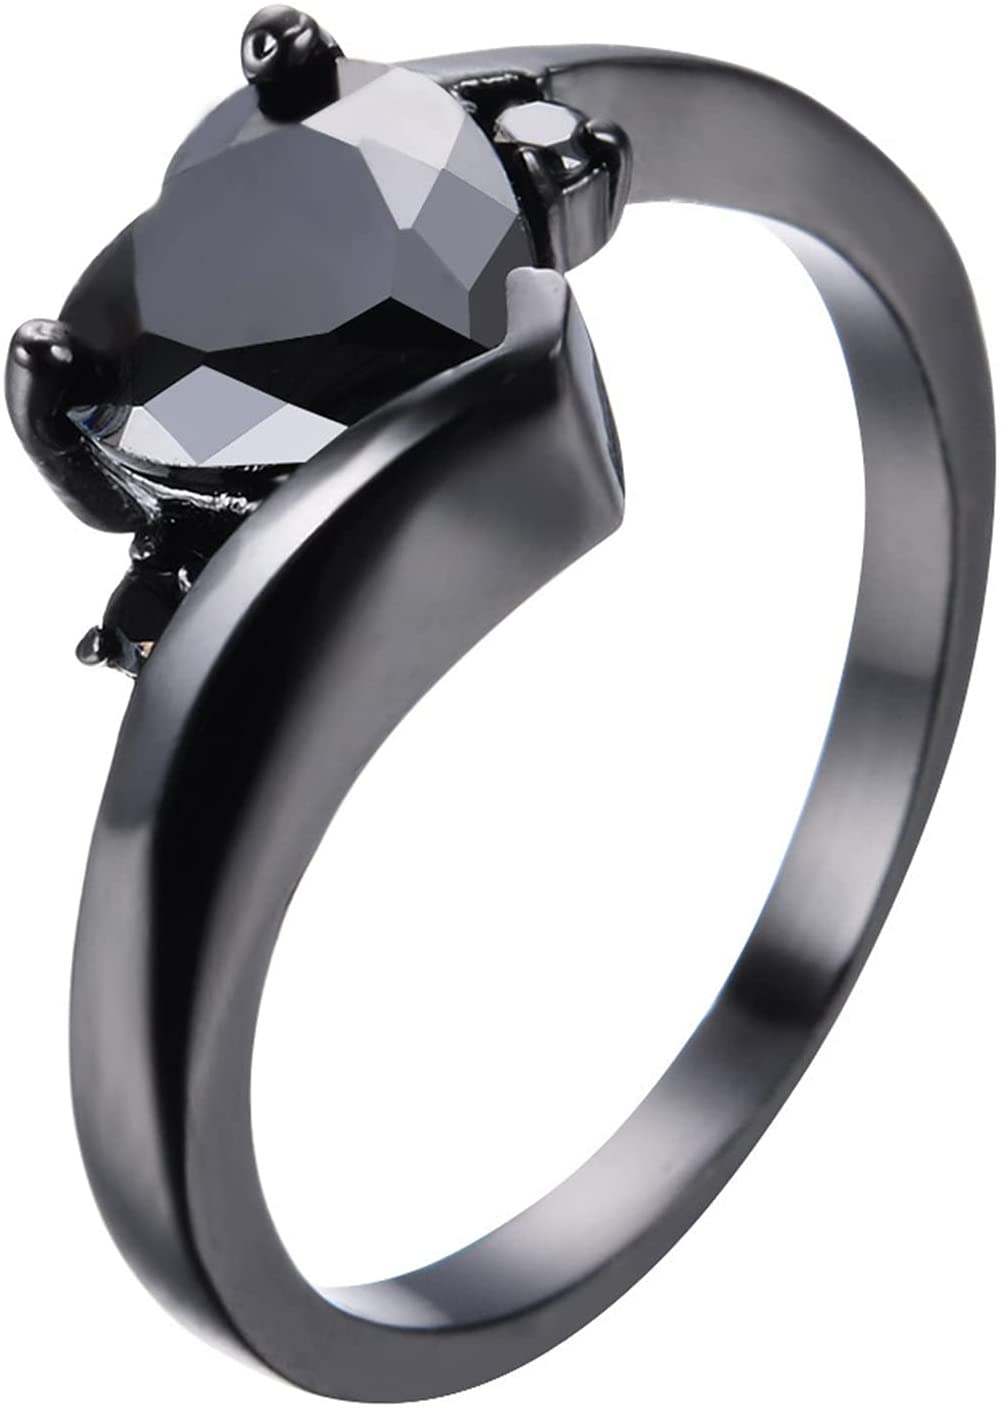 ManRiver Love Promise Heart Shape Diamond Gemstone Rings for Women Gifts Rings Jewelry Accessory – (Black, 8)